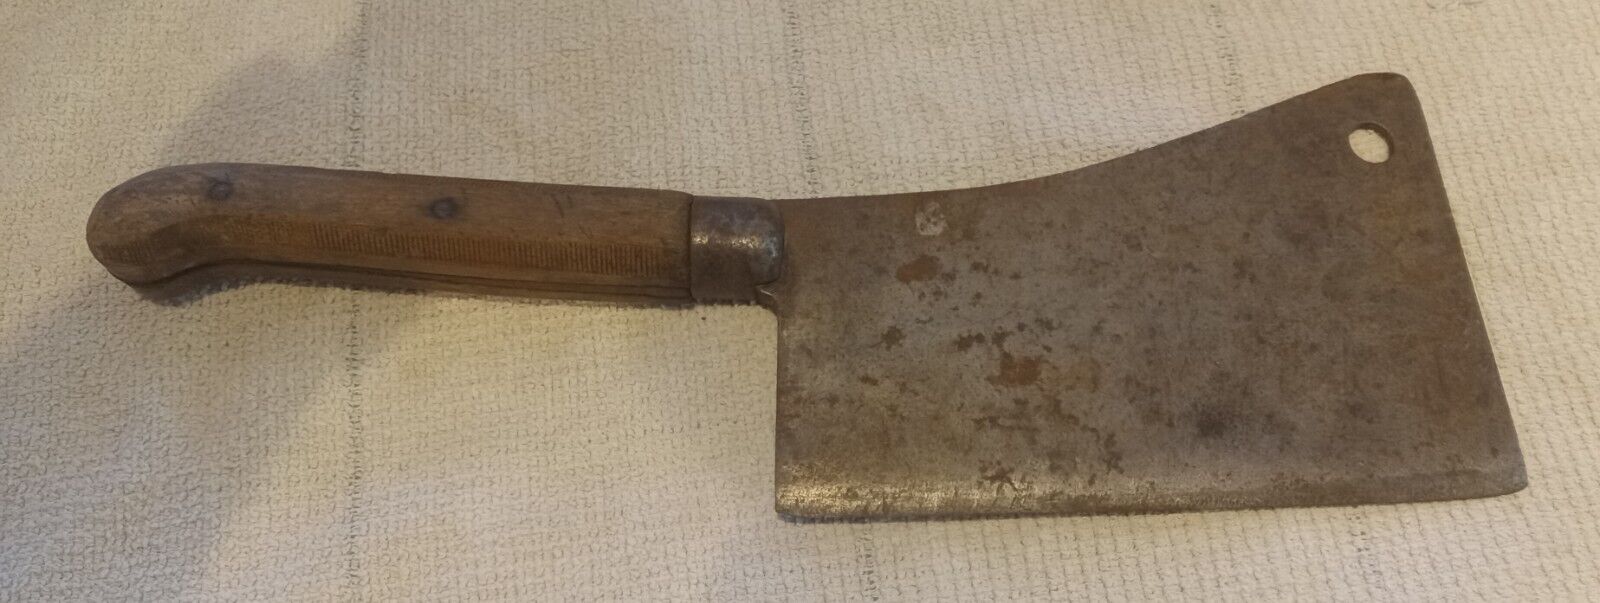 Antique Foster Arrow Mark #9 Meat Cleaver Butcher Knife Original Wood Handle